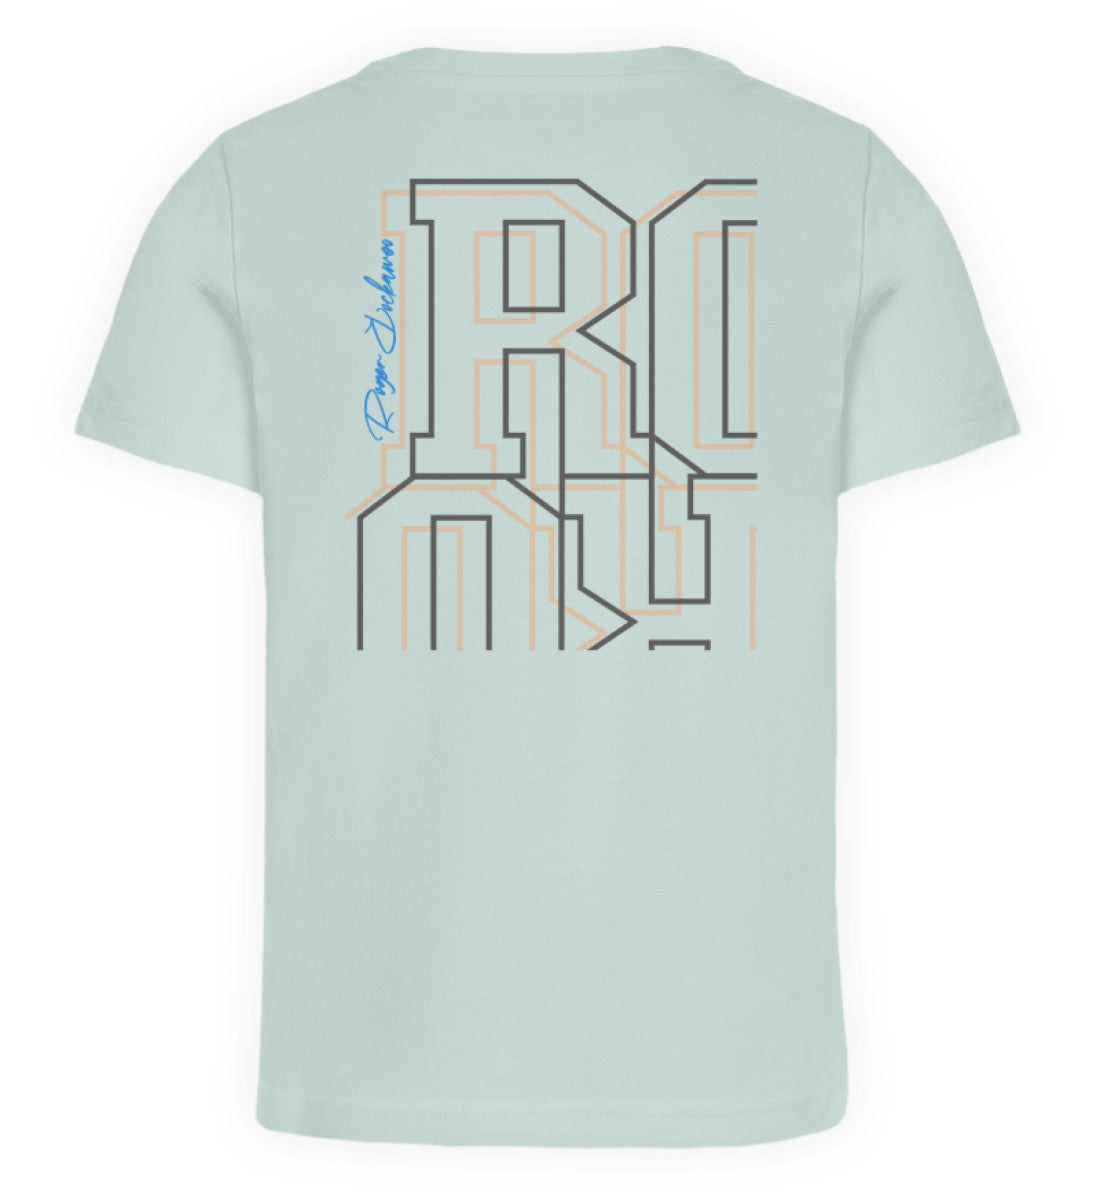 Carribean Blue farbiges Kinder T-Shirt für Mädchen und Jungen bedruckt mit dem Design der Roger Rockawoo Kollektion and then basketball came along